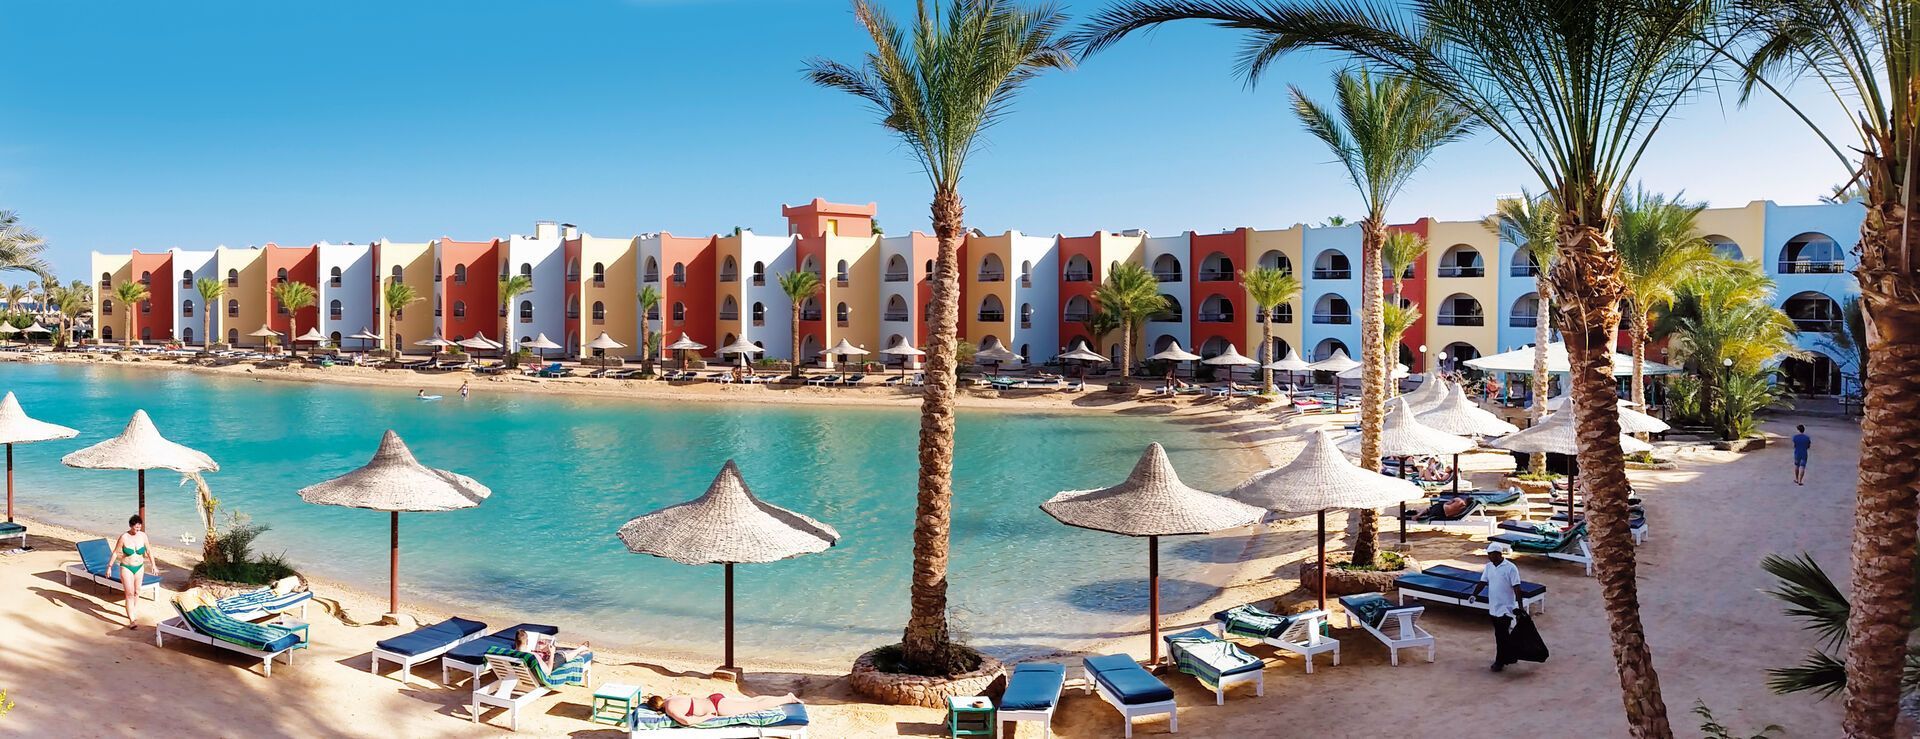 Hôtel Arabia Azur Resort 4* pas cher photo 1